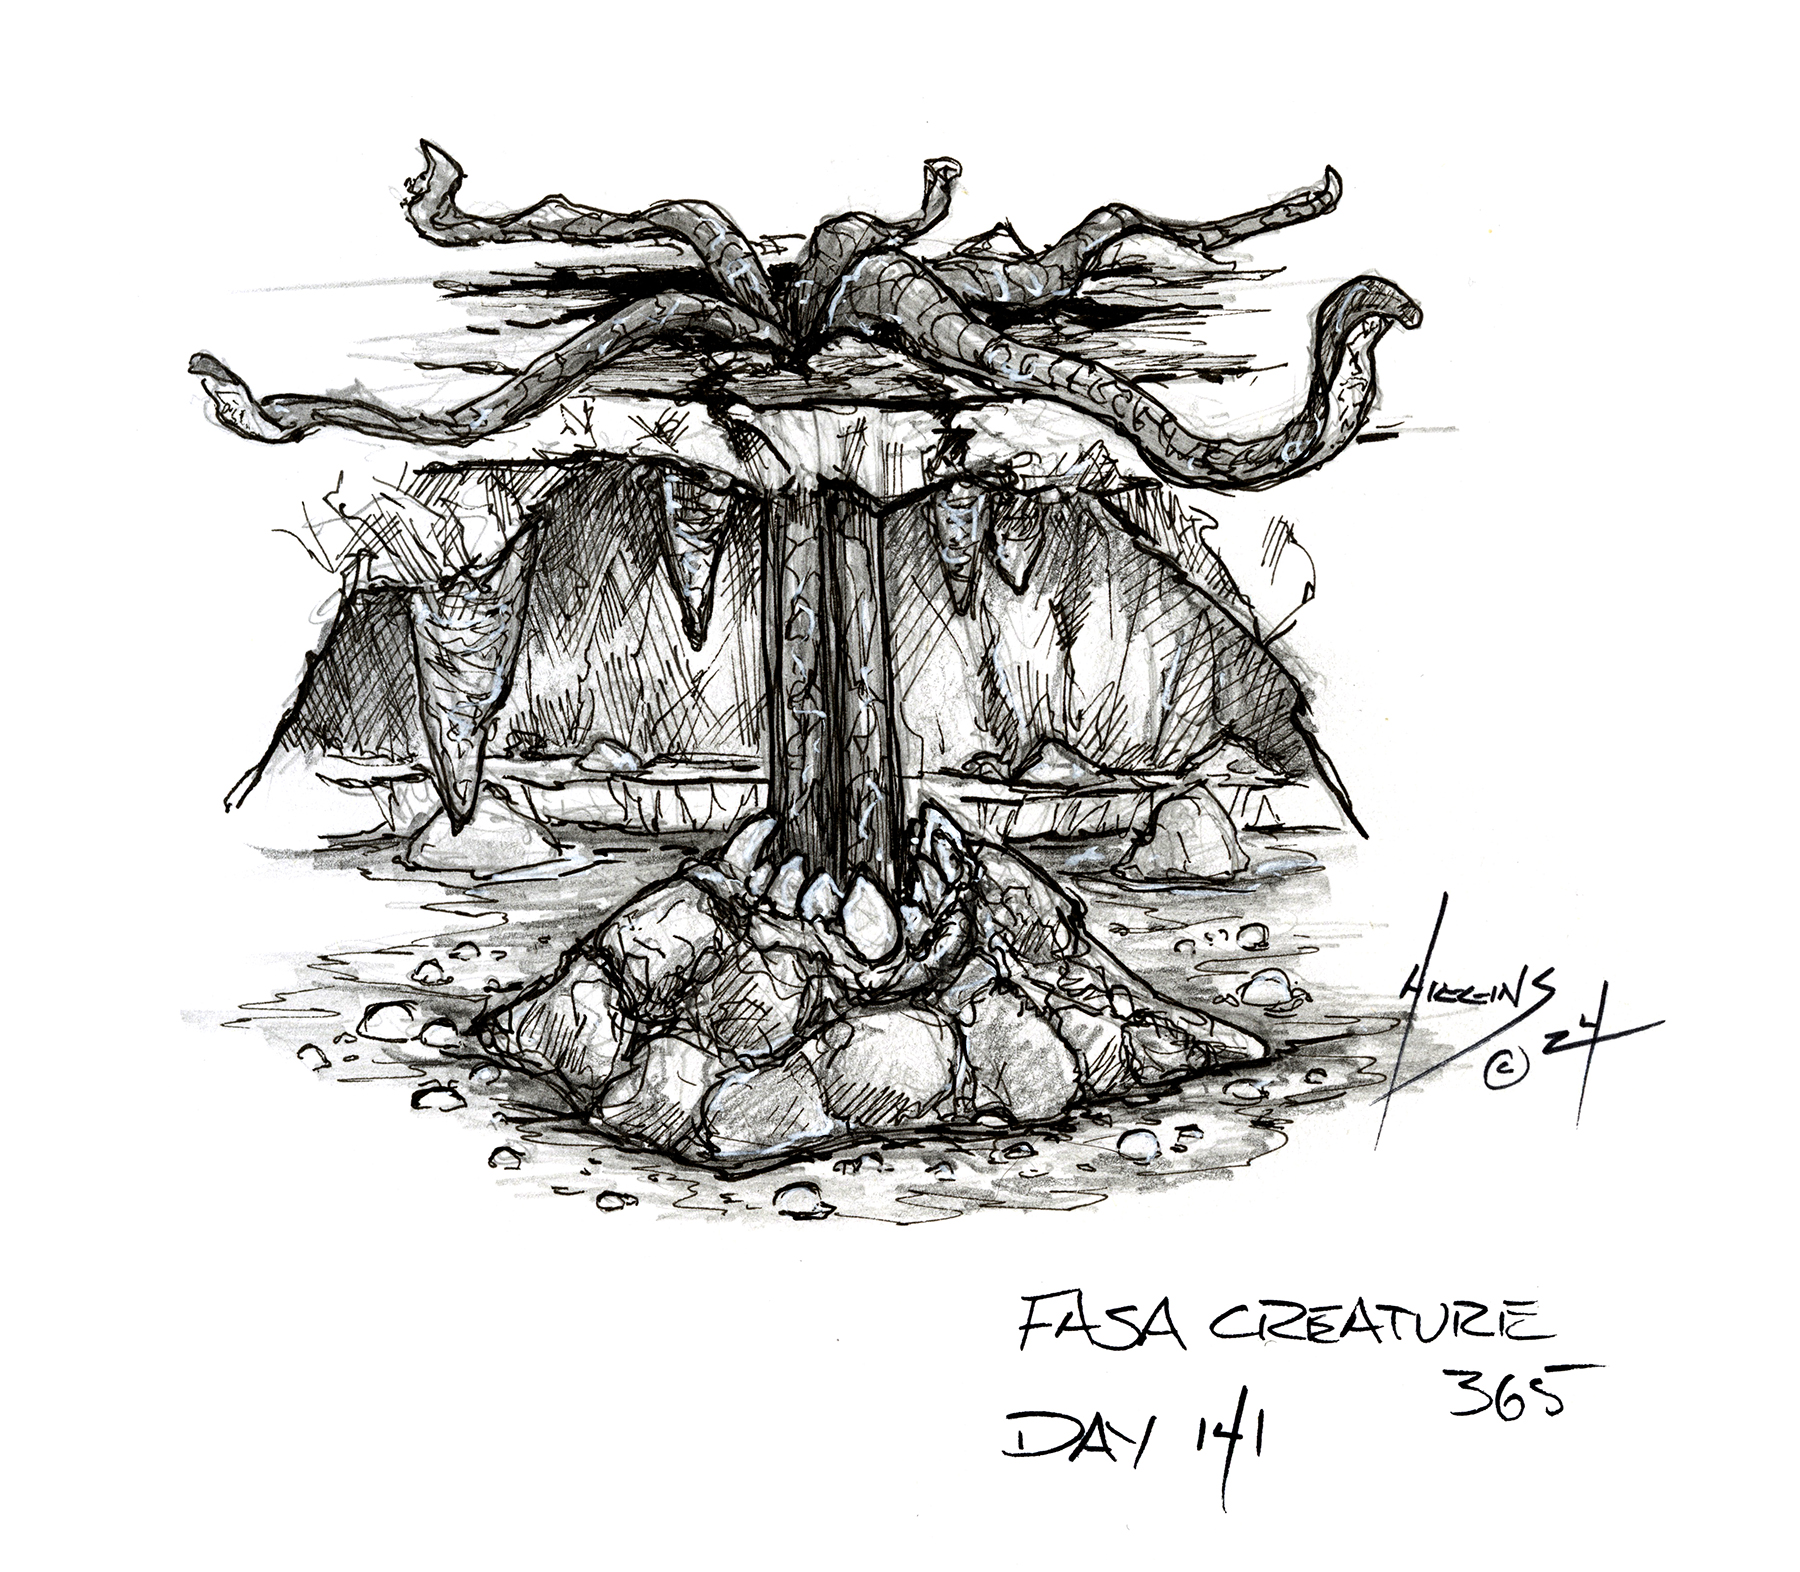 FASA Creature Concept 365 Challenge Day 141